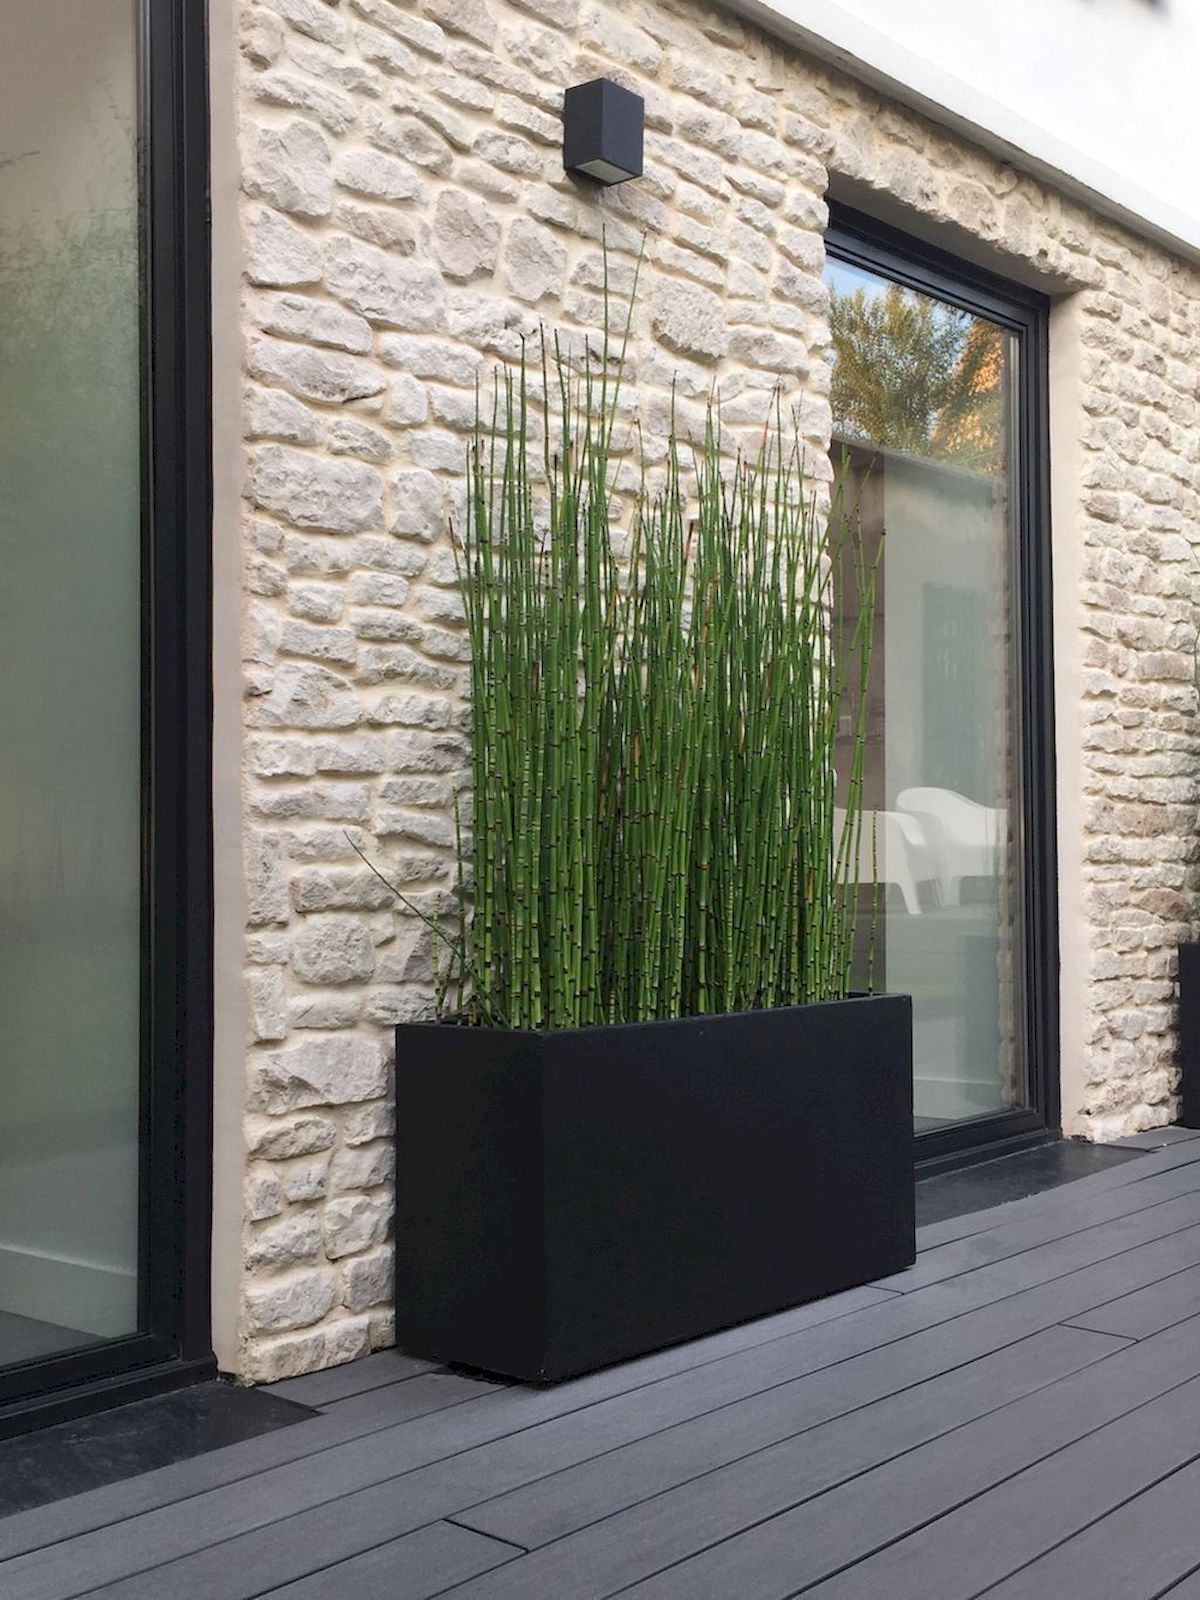 Unique Modern Precast Planters To Make Your Outdoors Stylish -   13 garden design House grass ideas